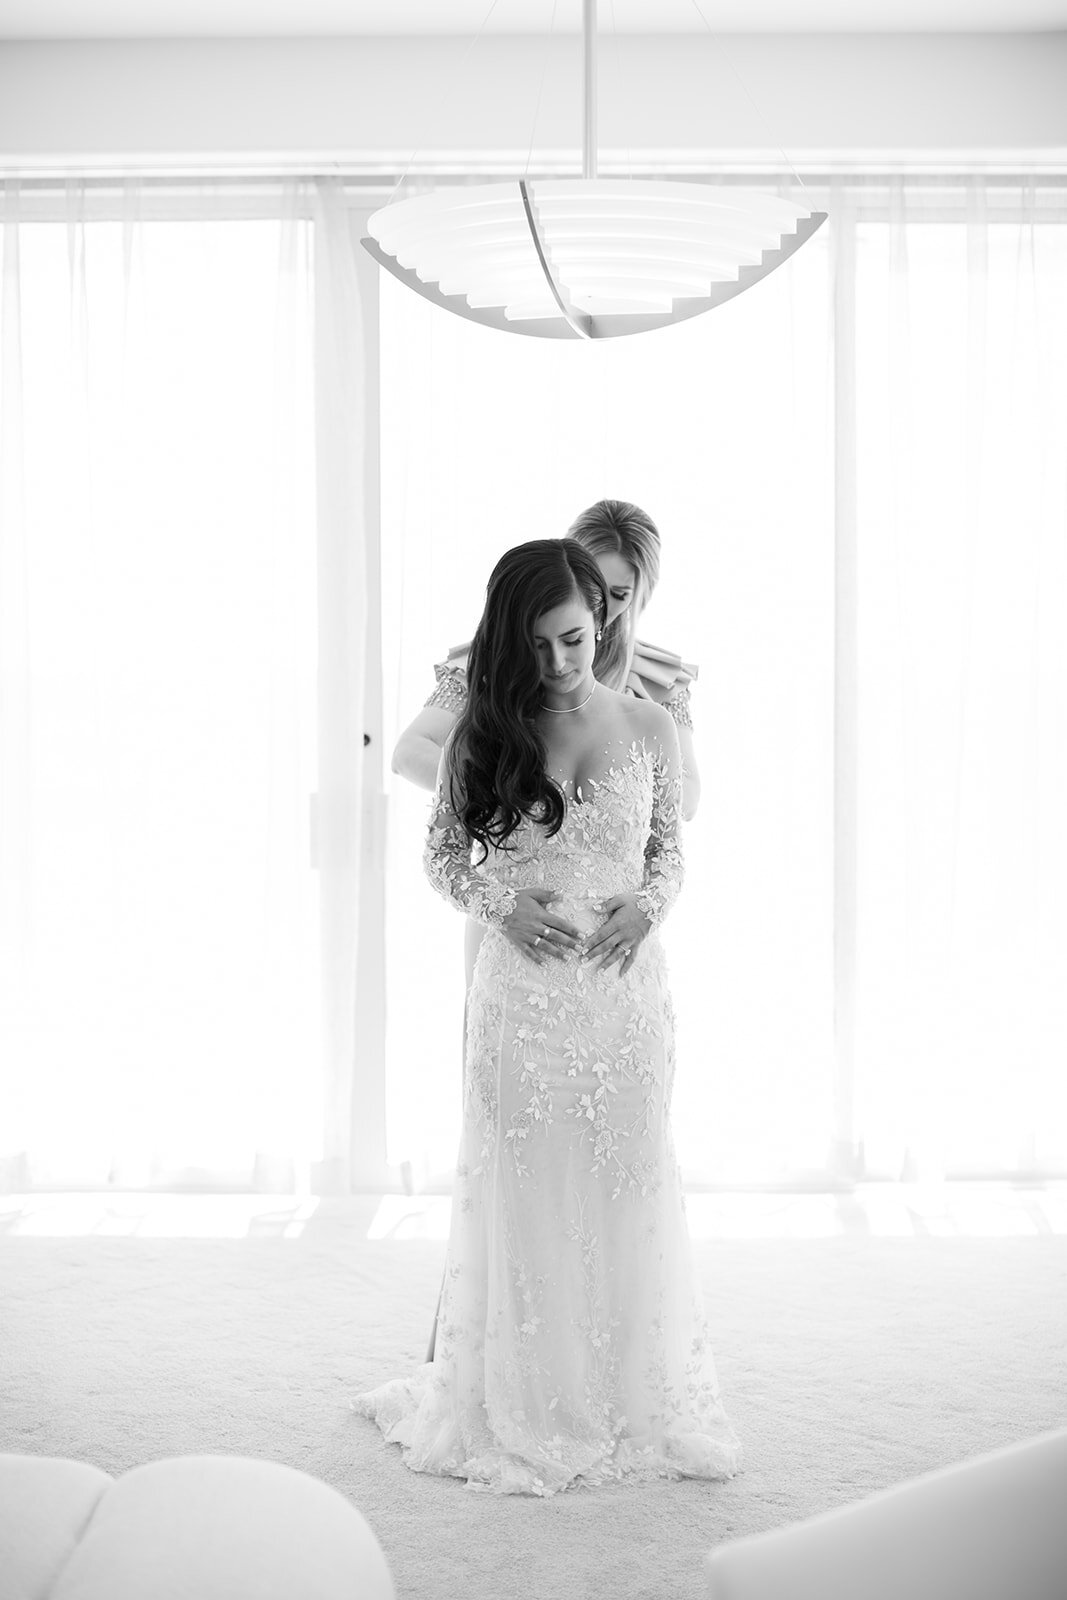 Levi & Amelia's Wedding - Natalie Schutt Photography - Getting Ready-47_websize.jpg